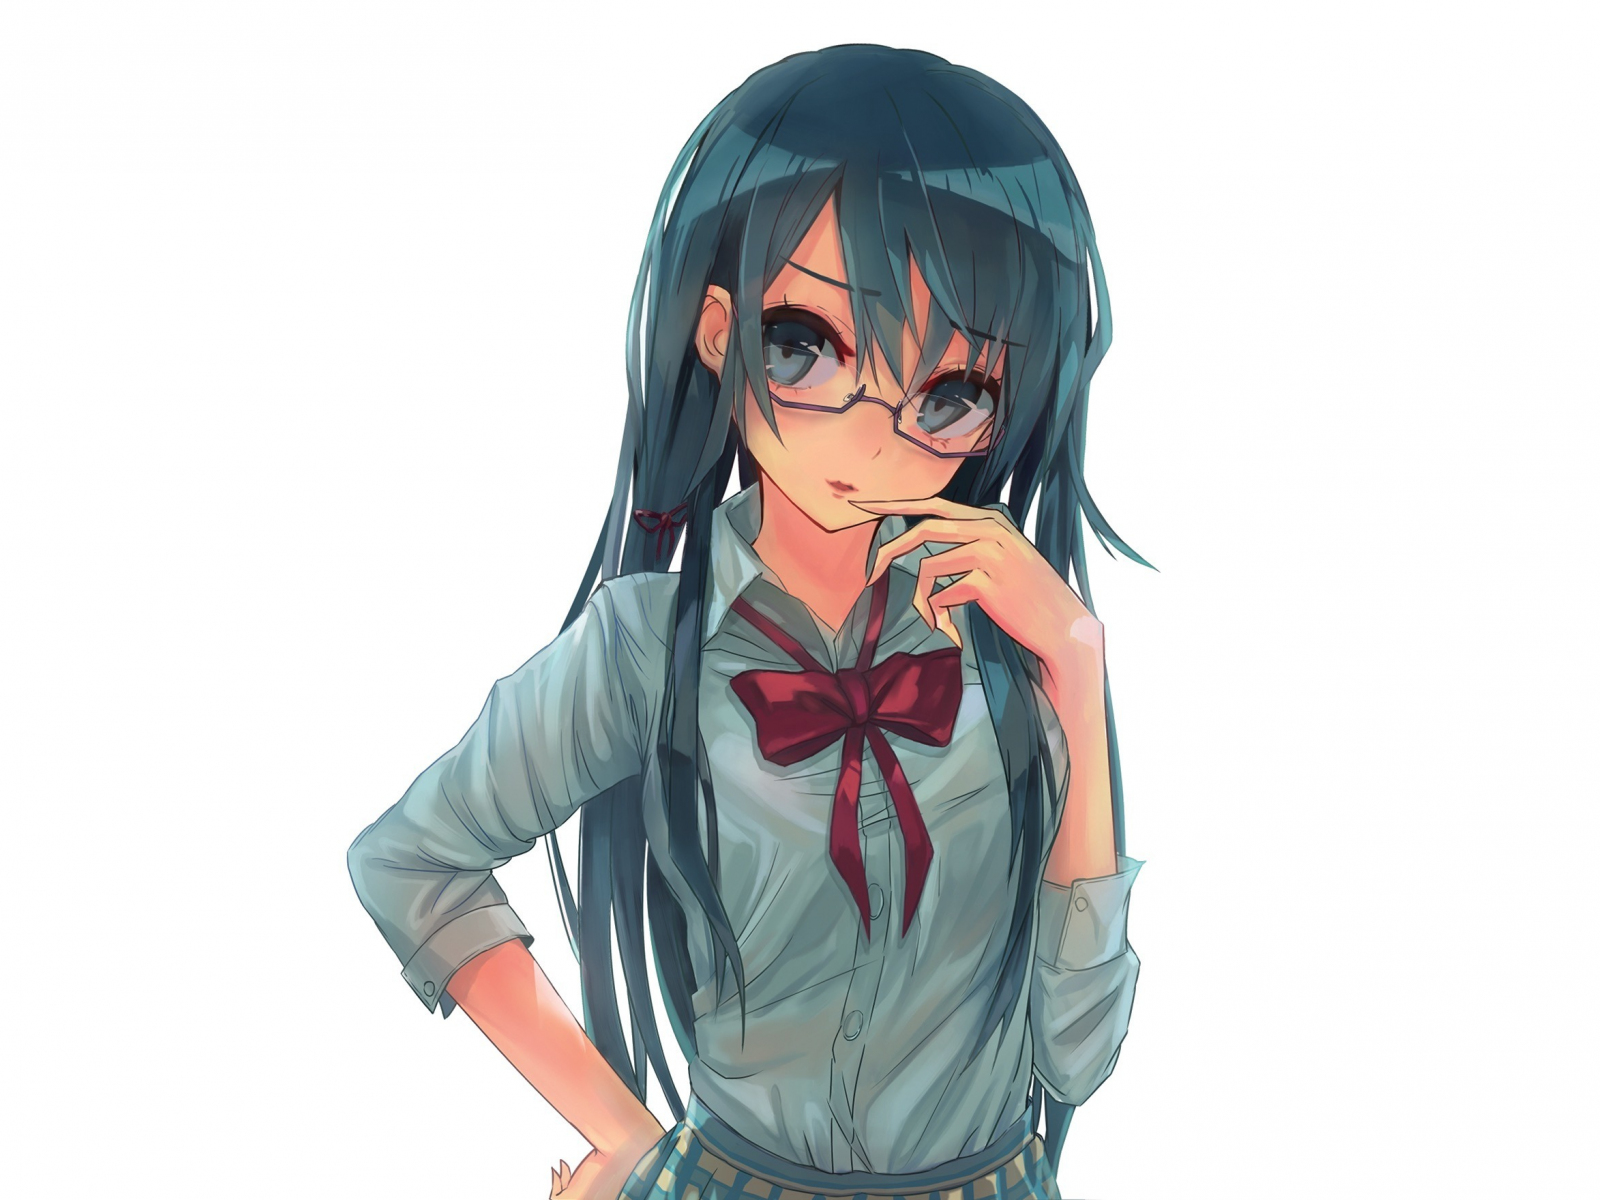 black hair cute anime girl with glasses